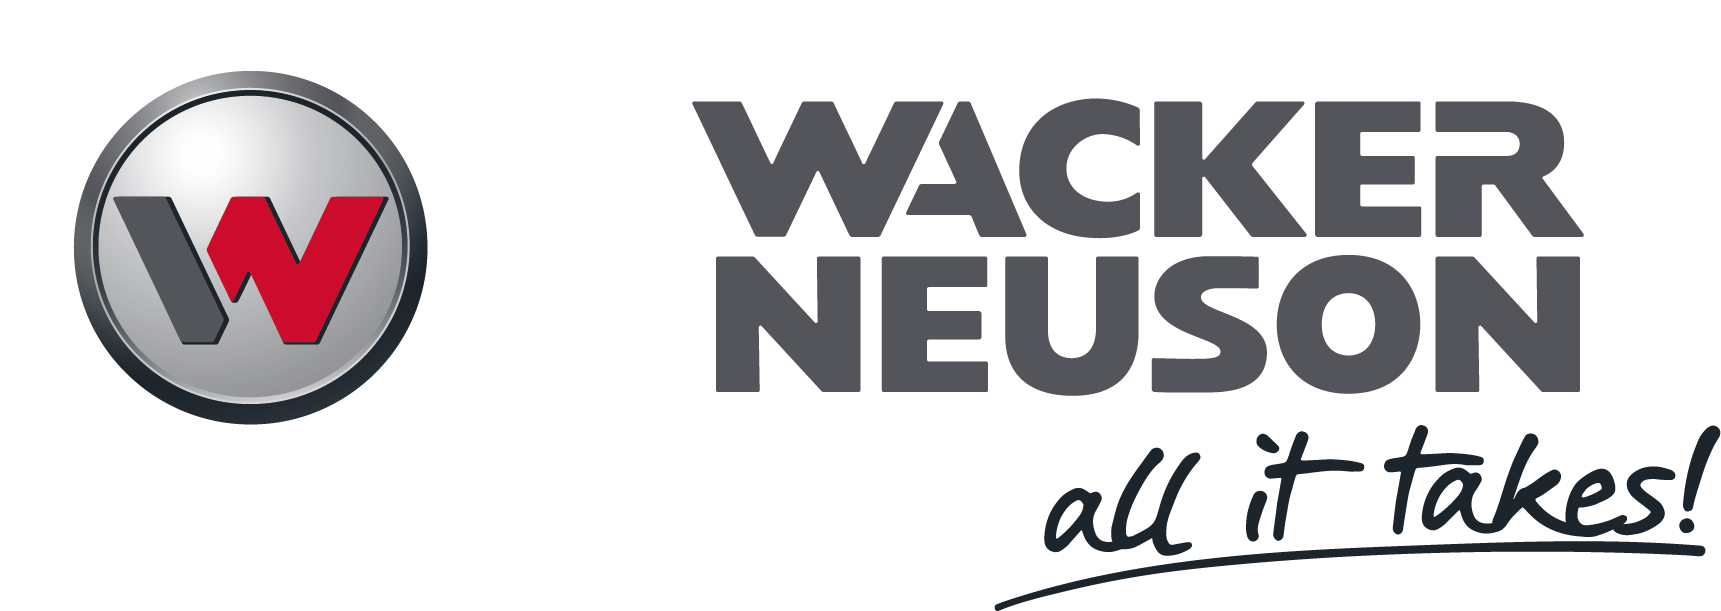 TEST Wacker Neuson America Corporation